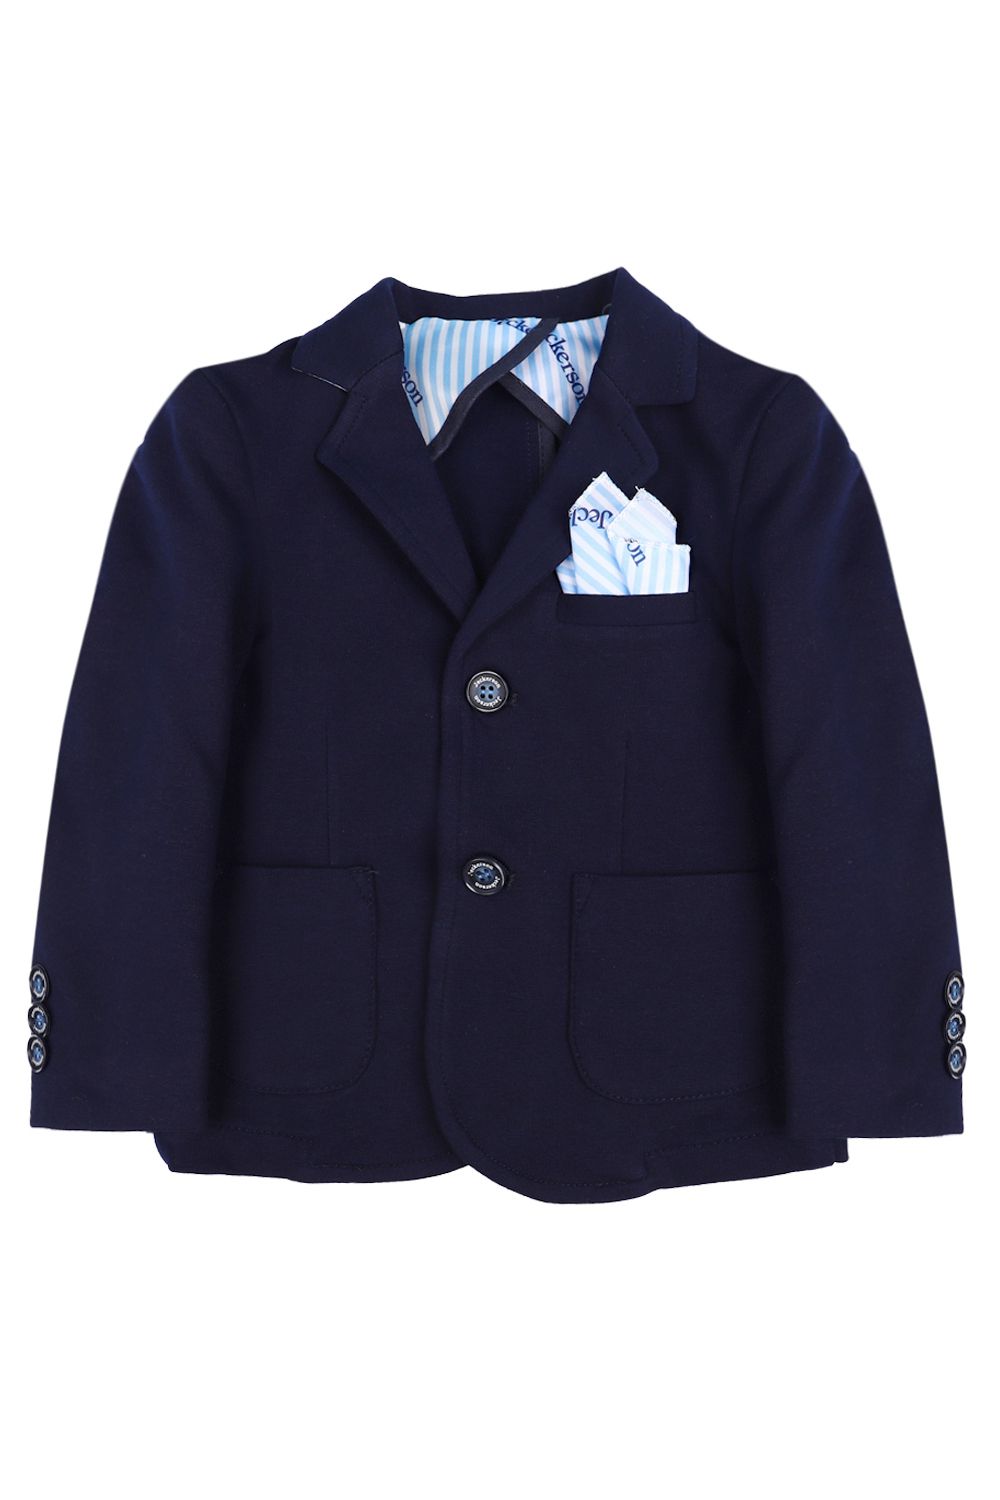 Пиджак Jeckerson, размер 80, цвет синий